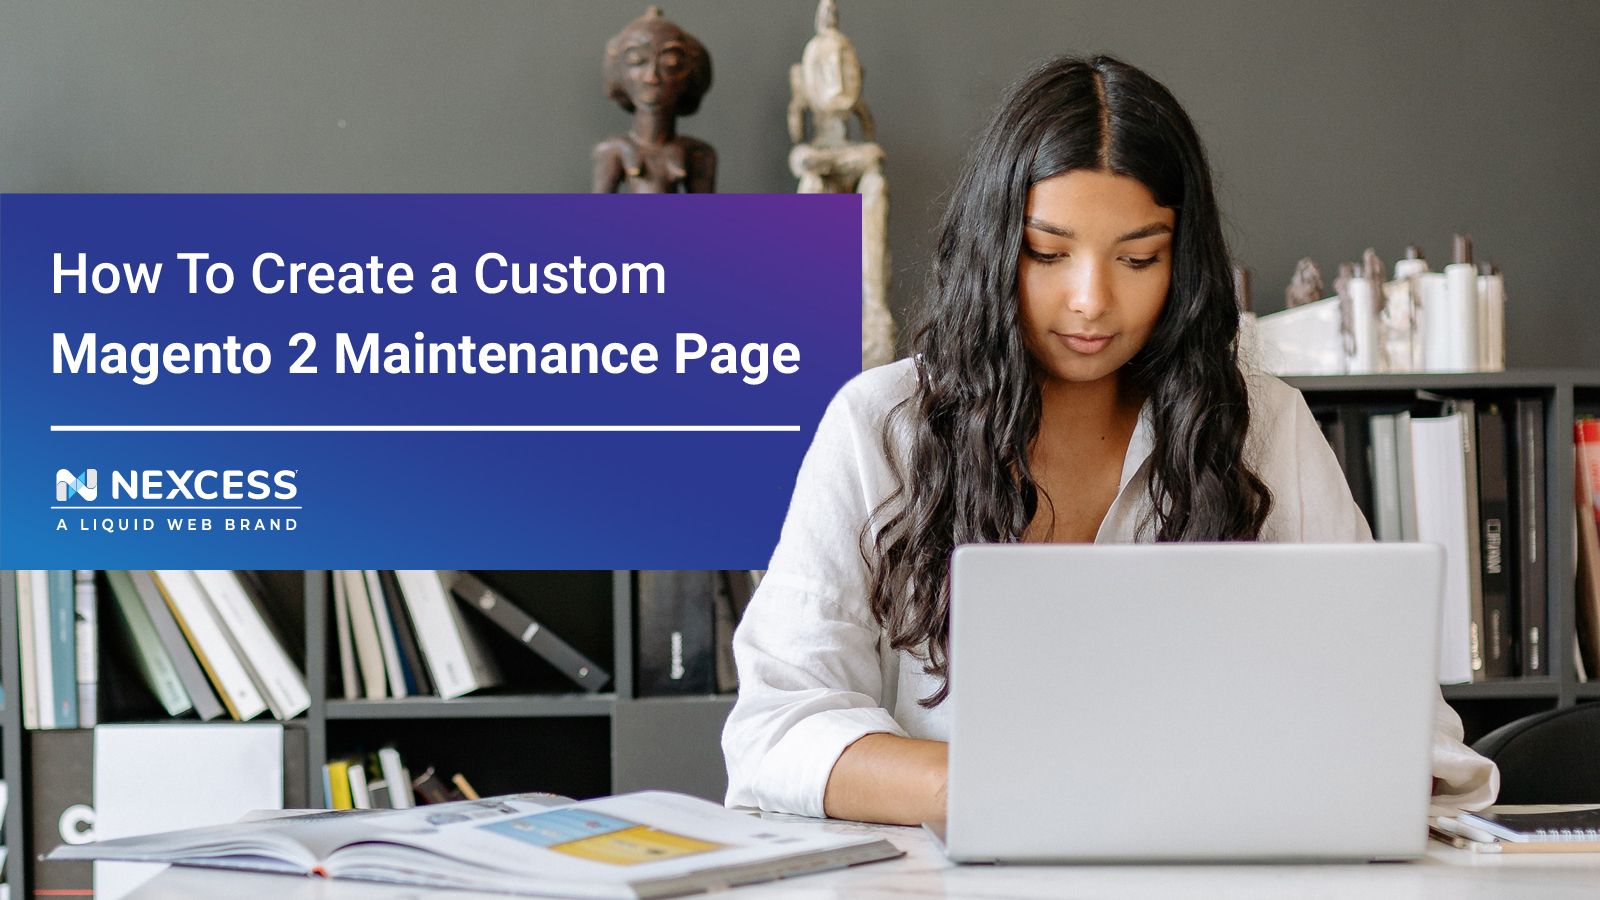 How to create a custom Magento 2 maintenance page.